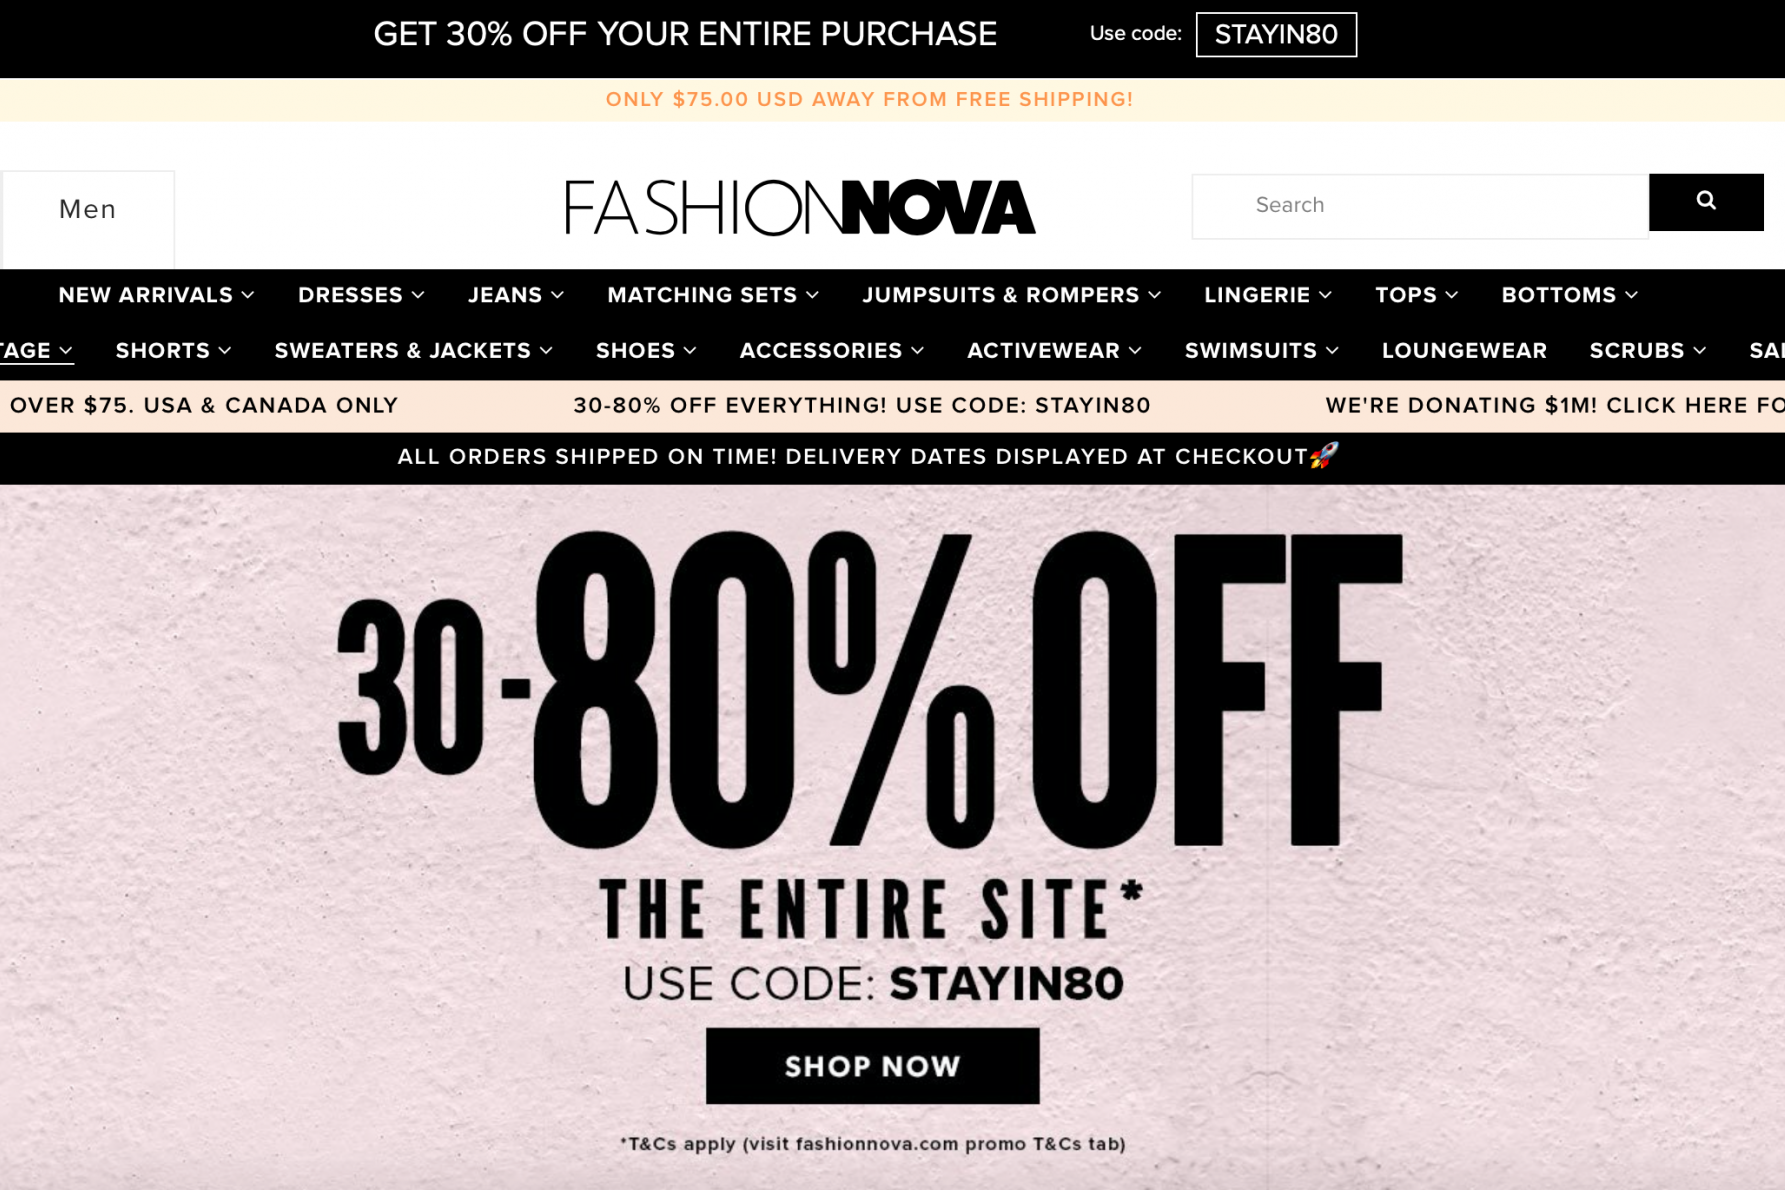 Fashion Nova faces backlash after stimulus check promotion (Fashion Nova)